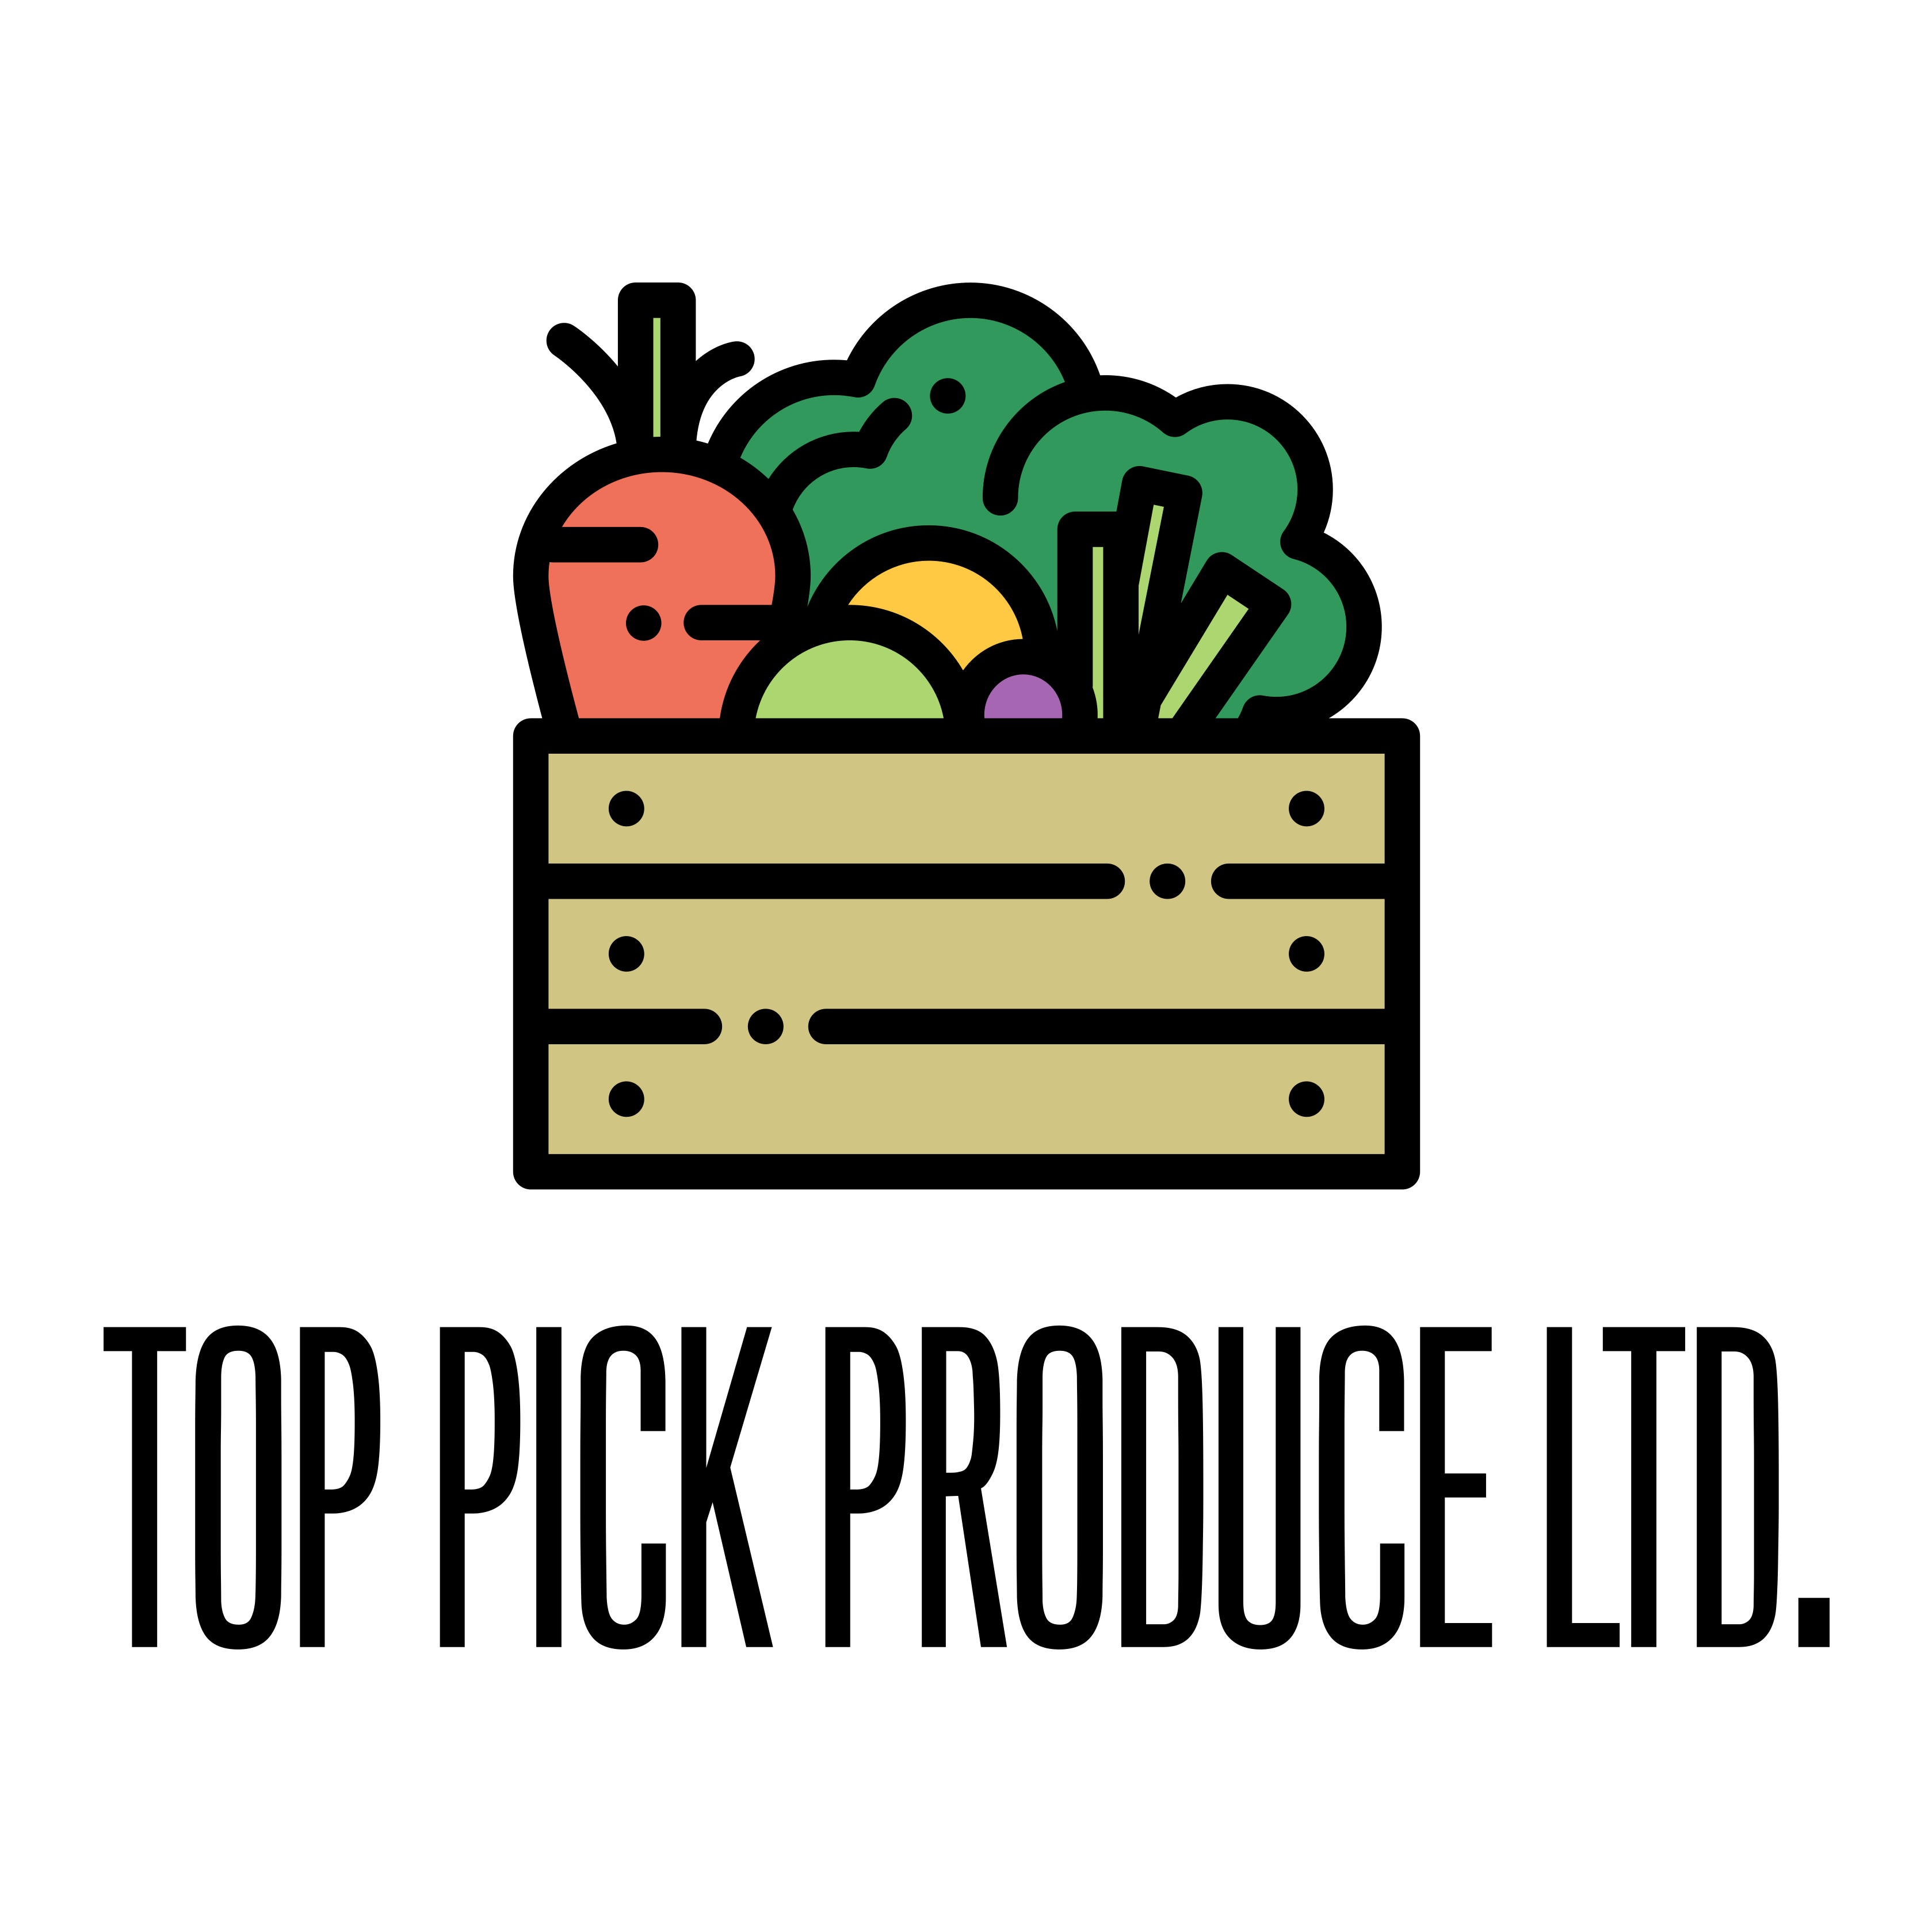 Top Pick Produce Ltd. 